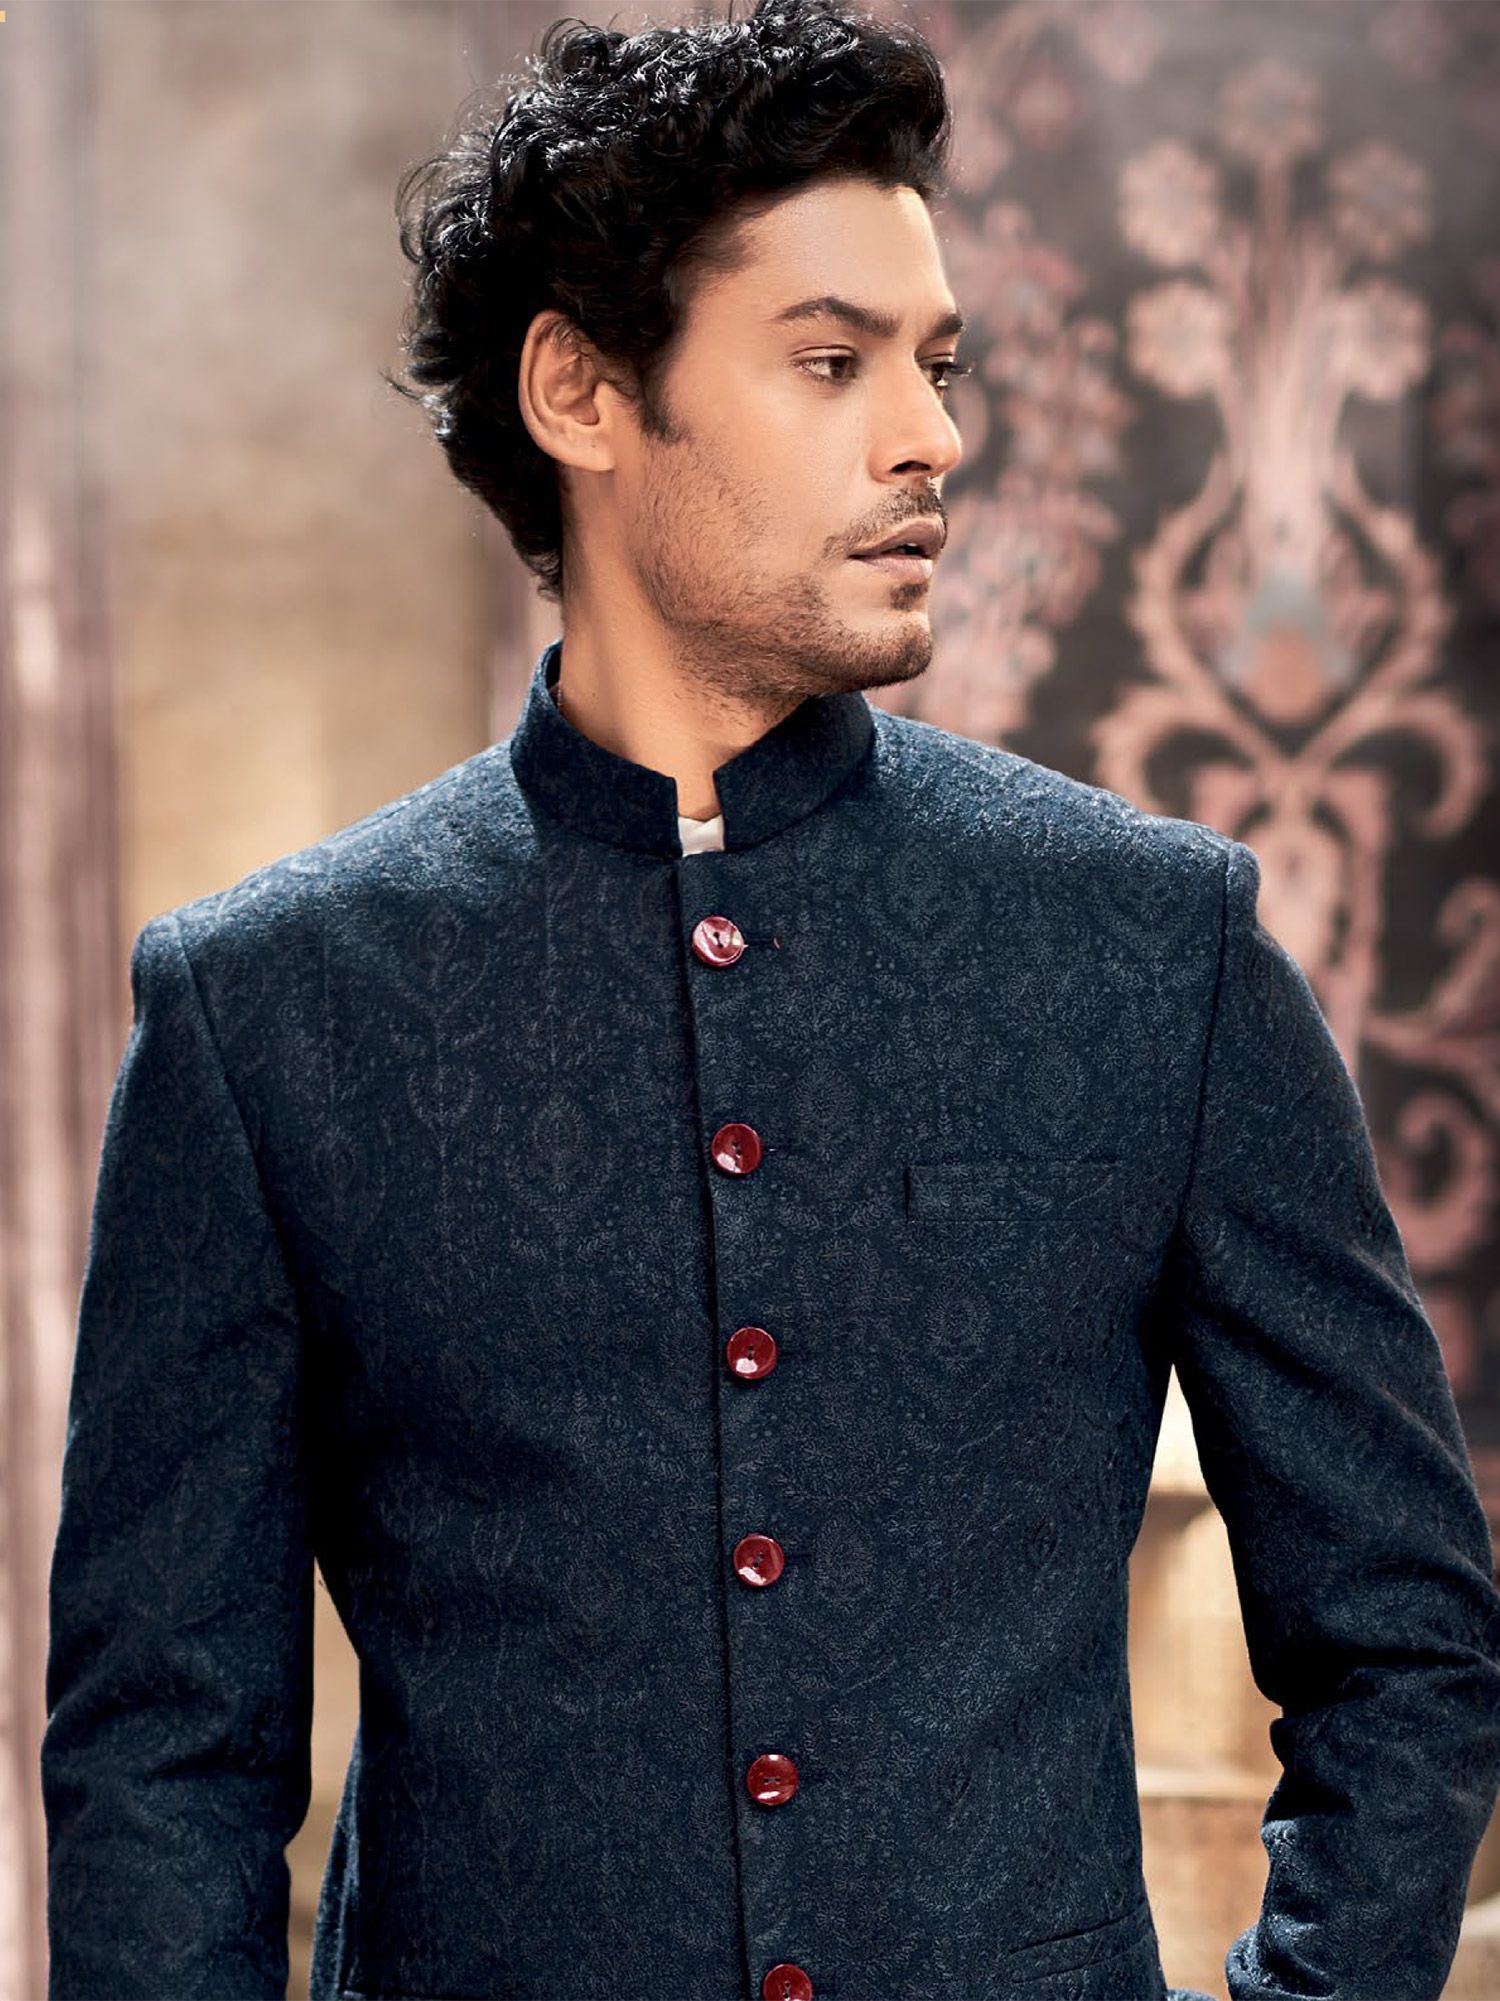 Buy Jodhpuri Suit,indo Western,coat, Formal Suit,party Wear, Ethnic Wear,  Wedding Suit,blazer, Men's Sherwani, Customised, Jacket. Tuxedo Suits  Online in India - Etsy